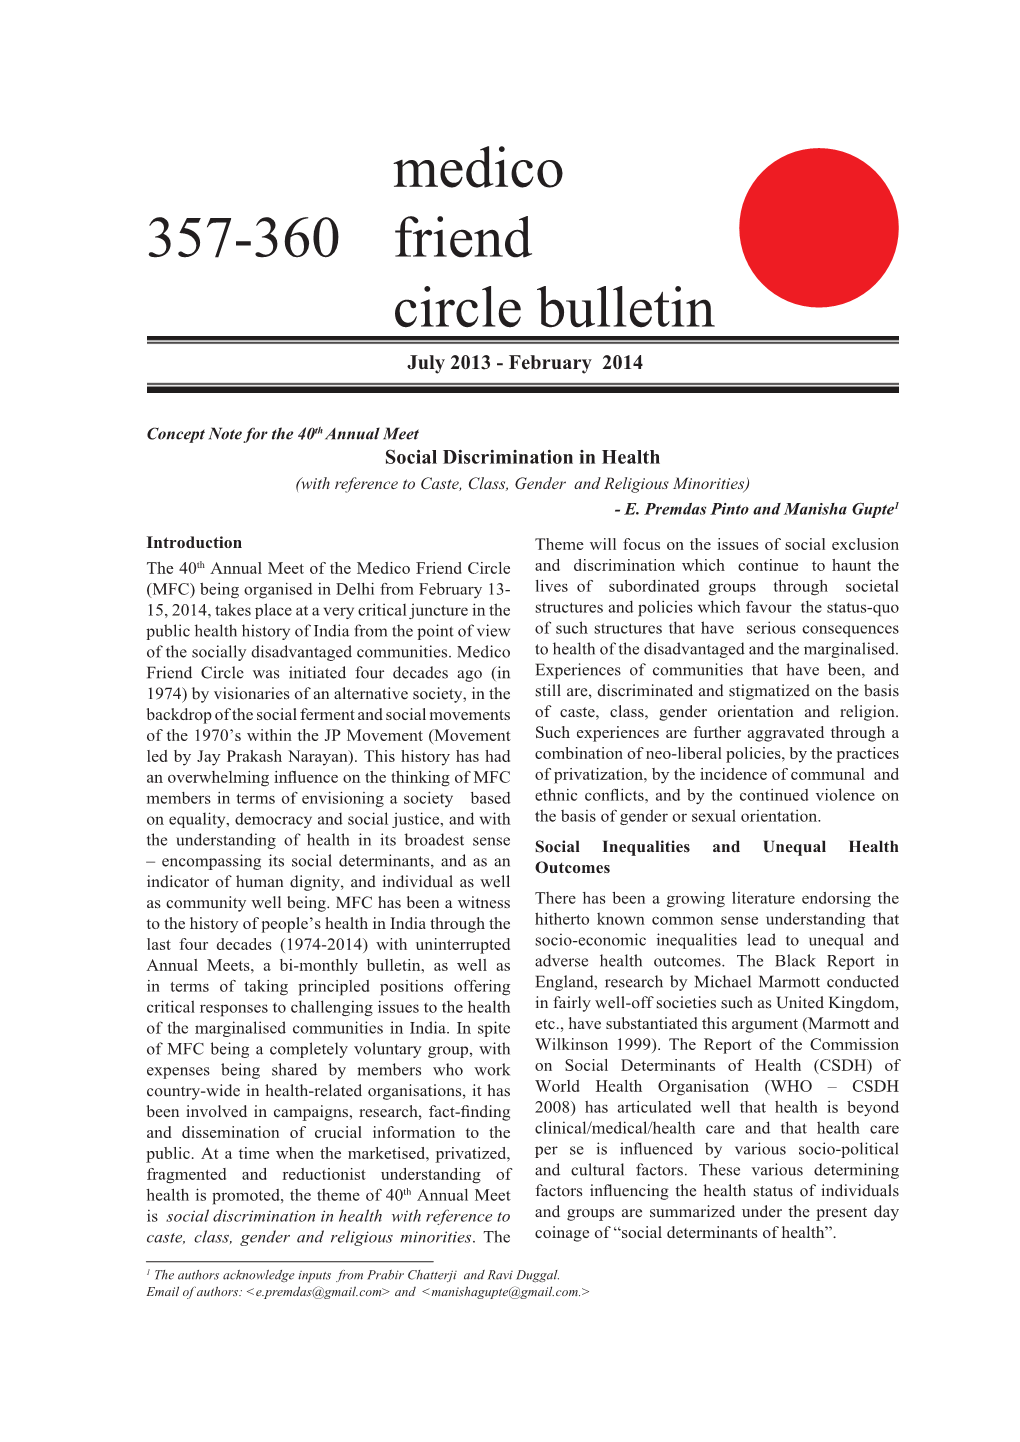 Medico 357-360 Friend Circle Bulletin July 2013 - February 2014